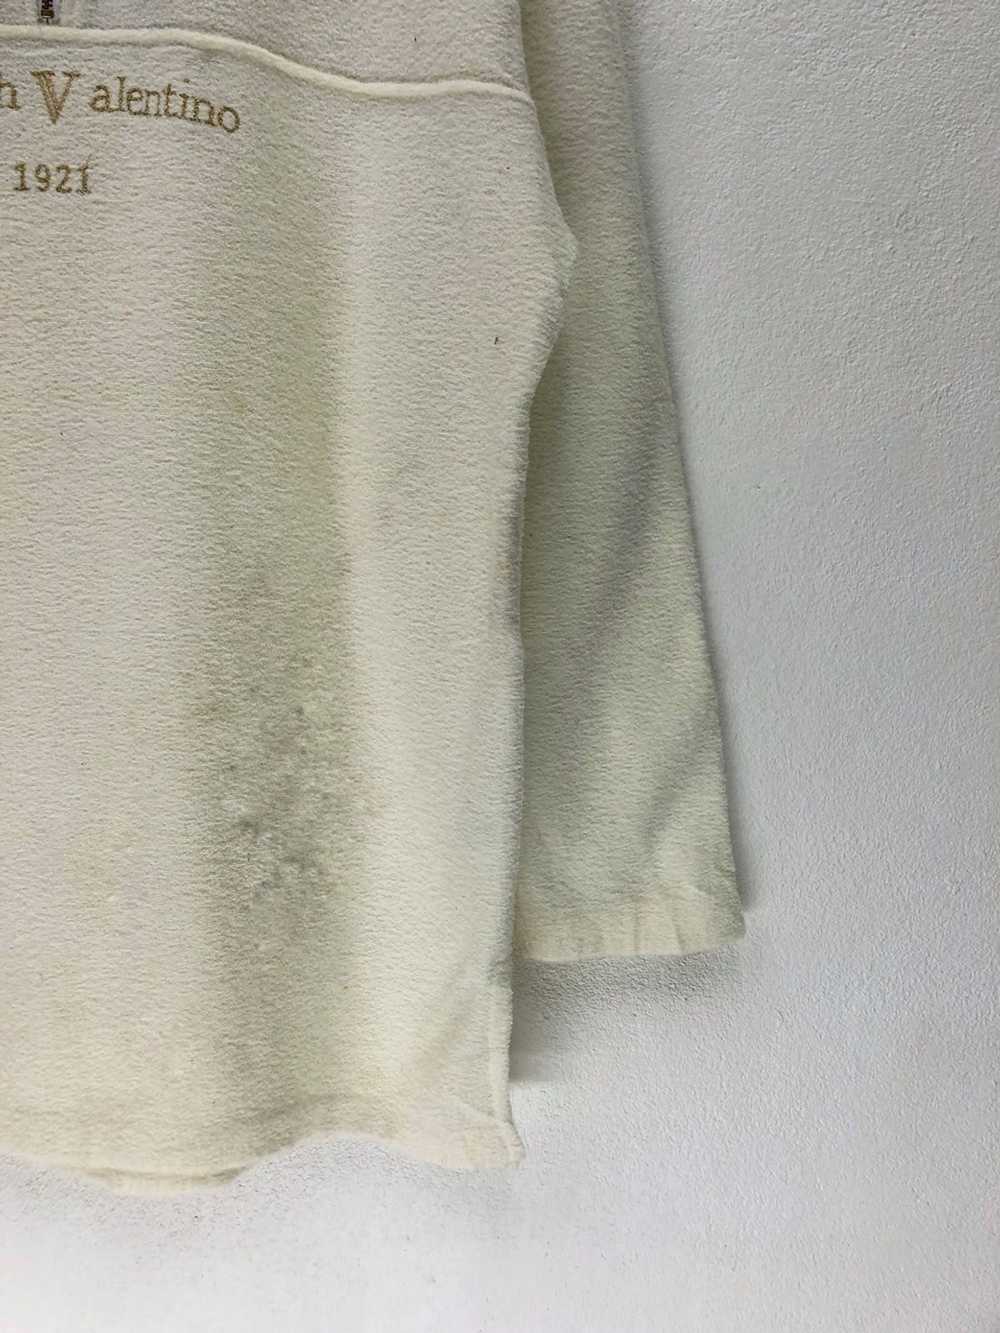 Valentino Vintage Rudolph Valentino Fleece Sweats… - image 4